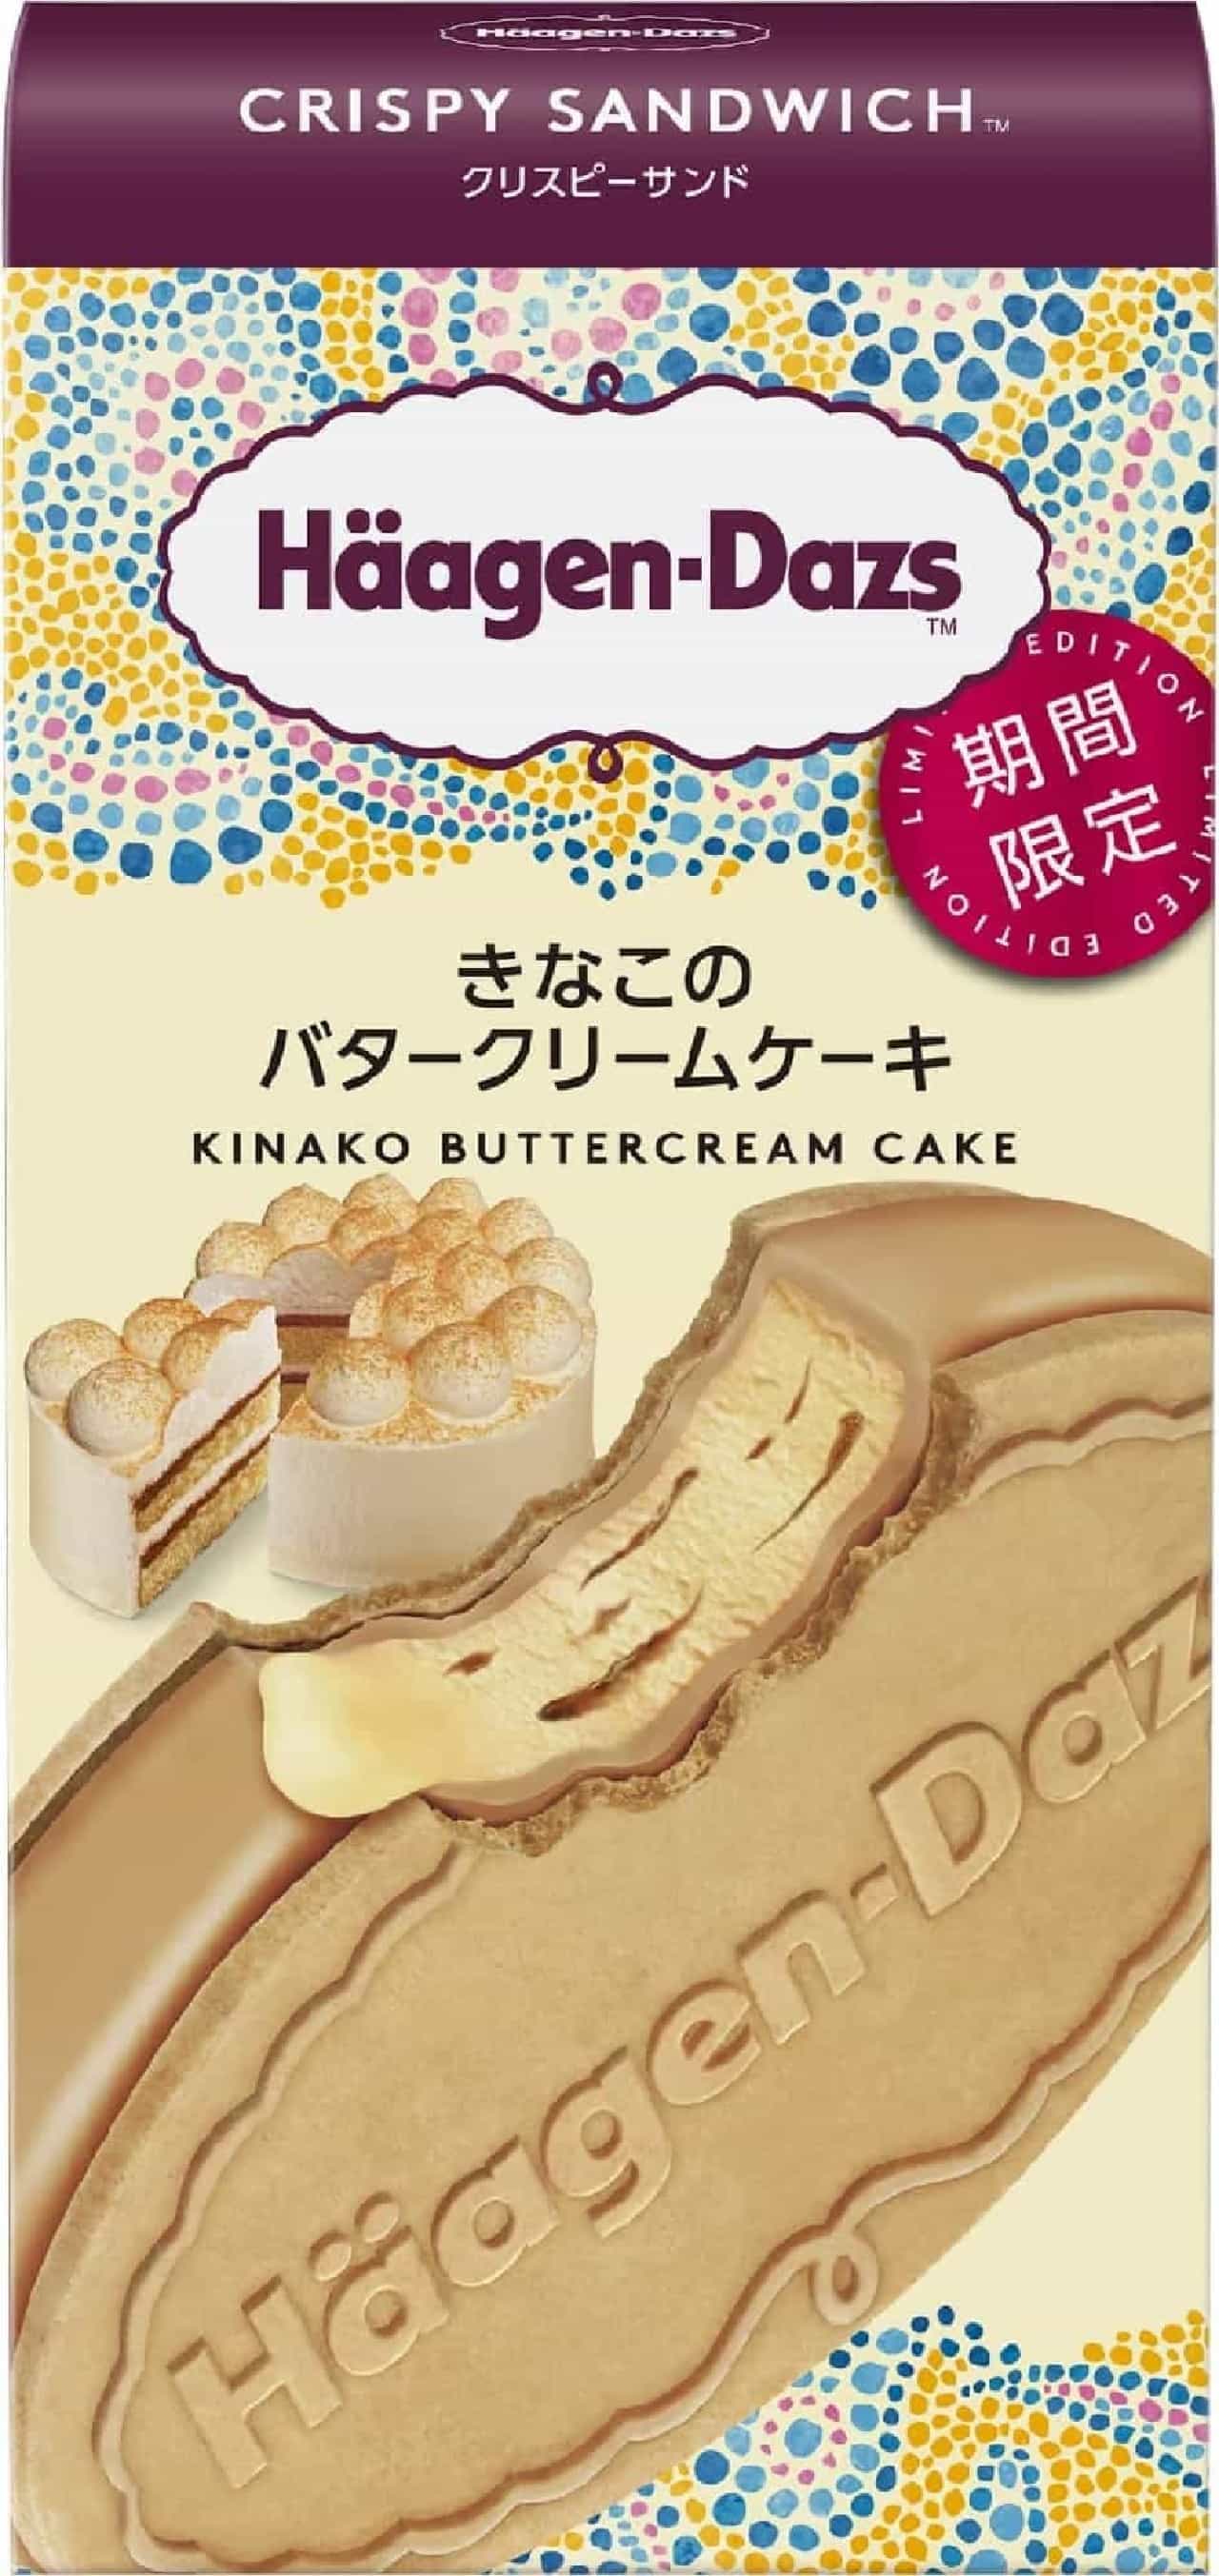 Haagen-Dazs Crispy Sandwich "Kinako no Buttercream Cake